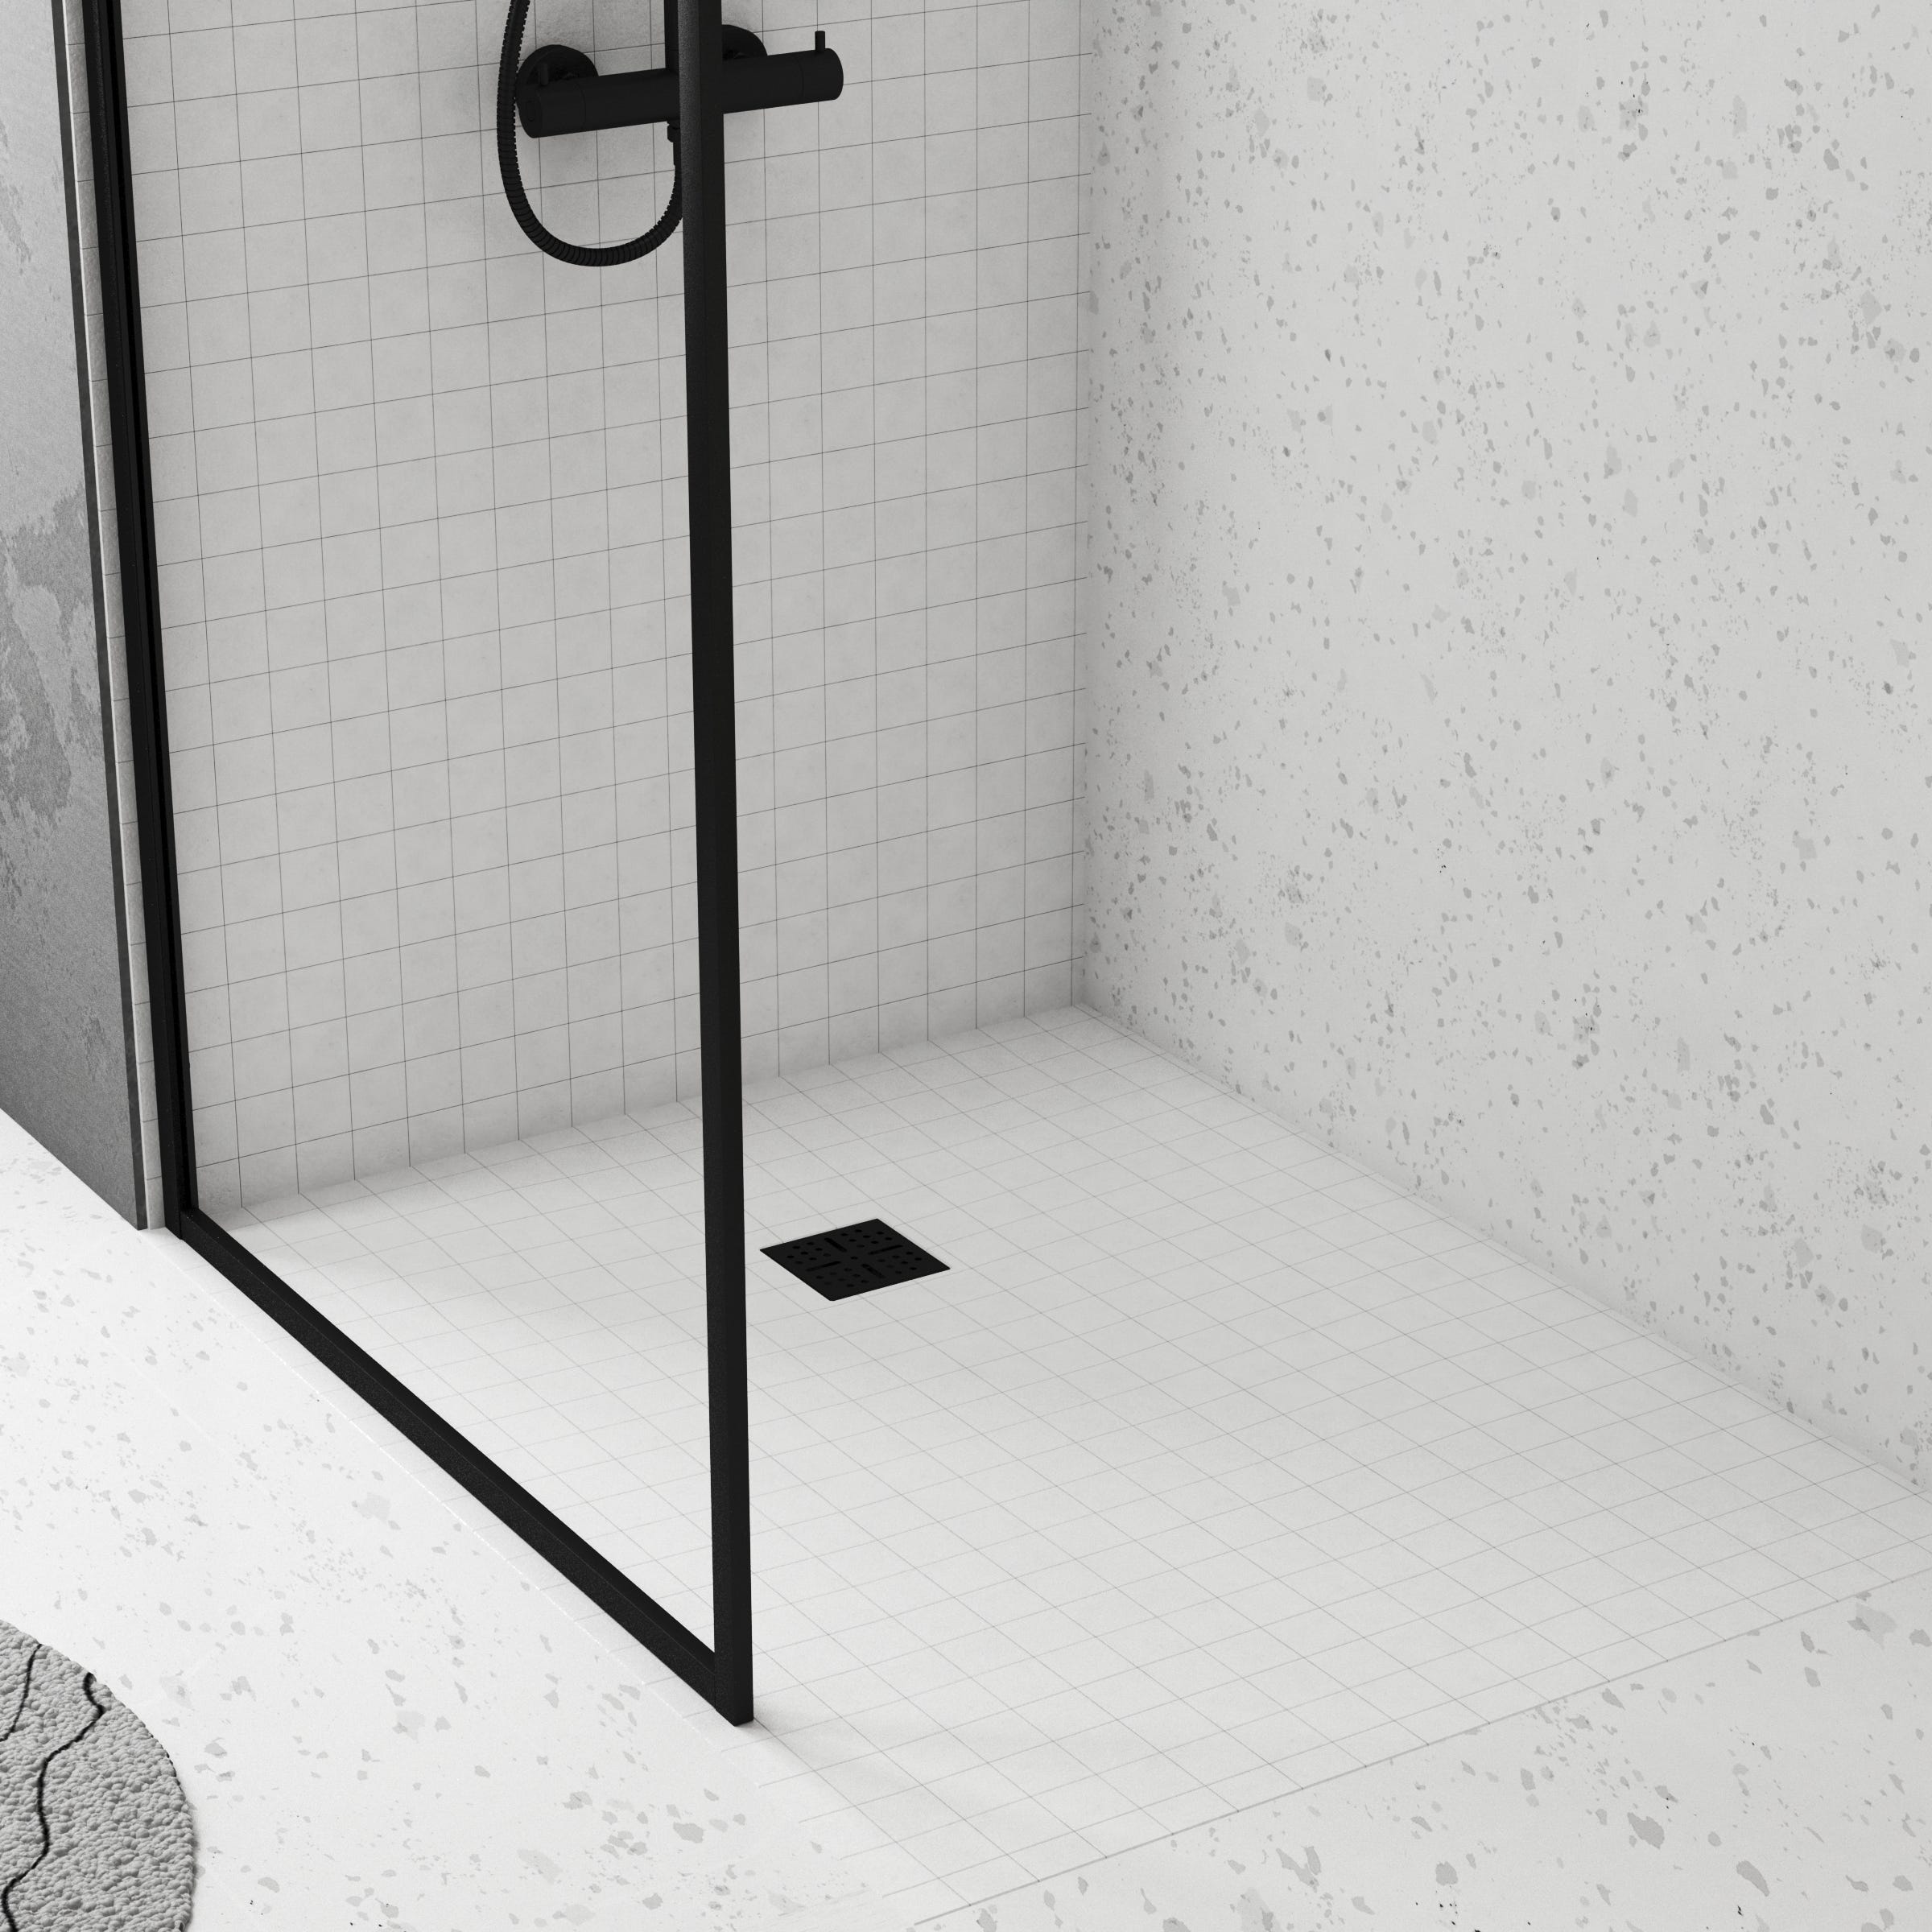 Plato de ducha a nivel de suelo con desagüe lineal a pared